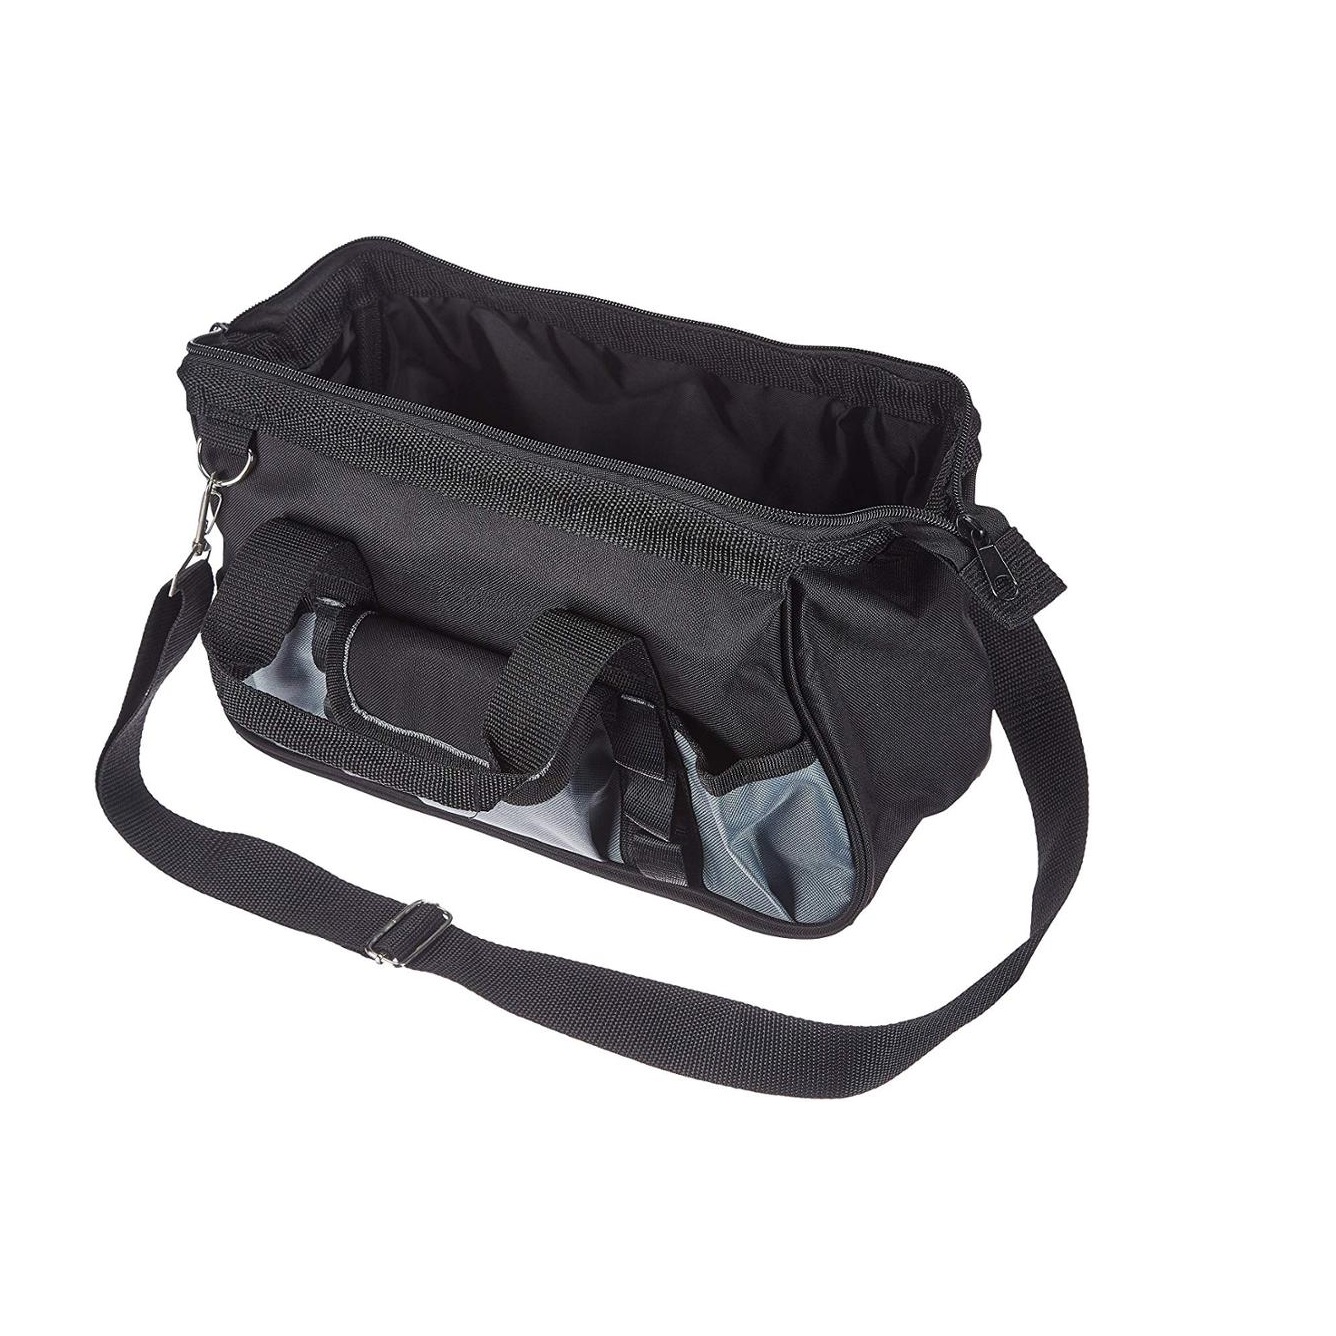 Electrical Tool Bags - Golf Bag,Sports Bag,Diaper Bag Manufacturer ...